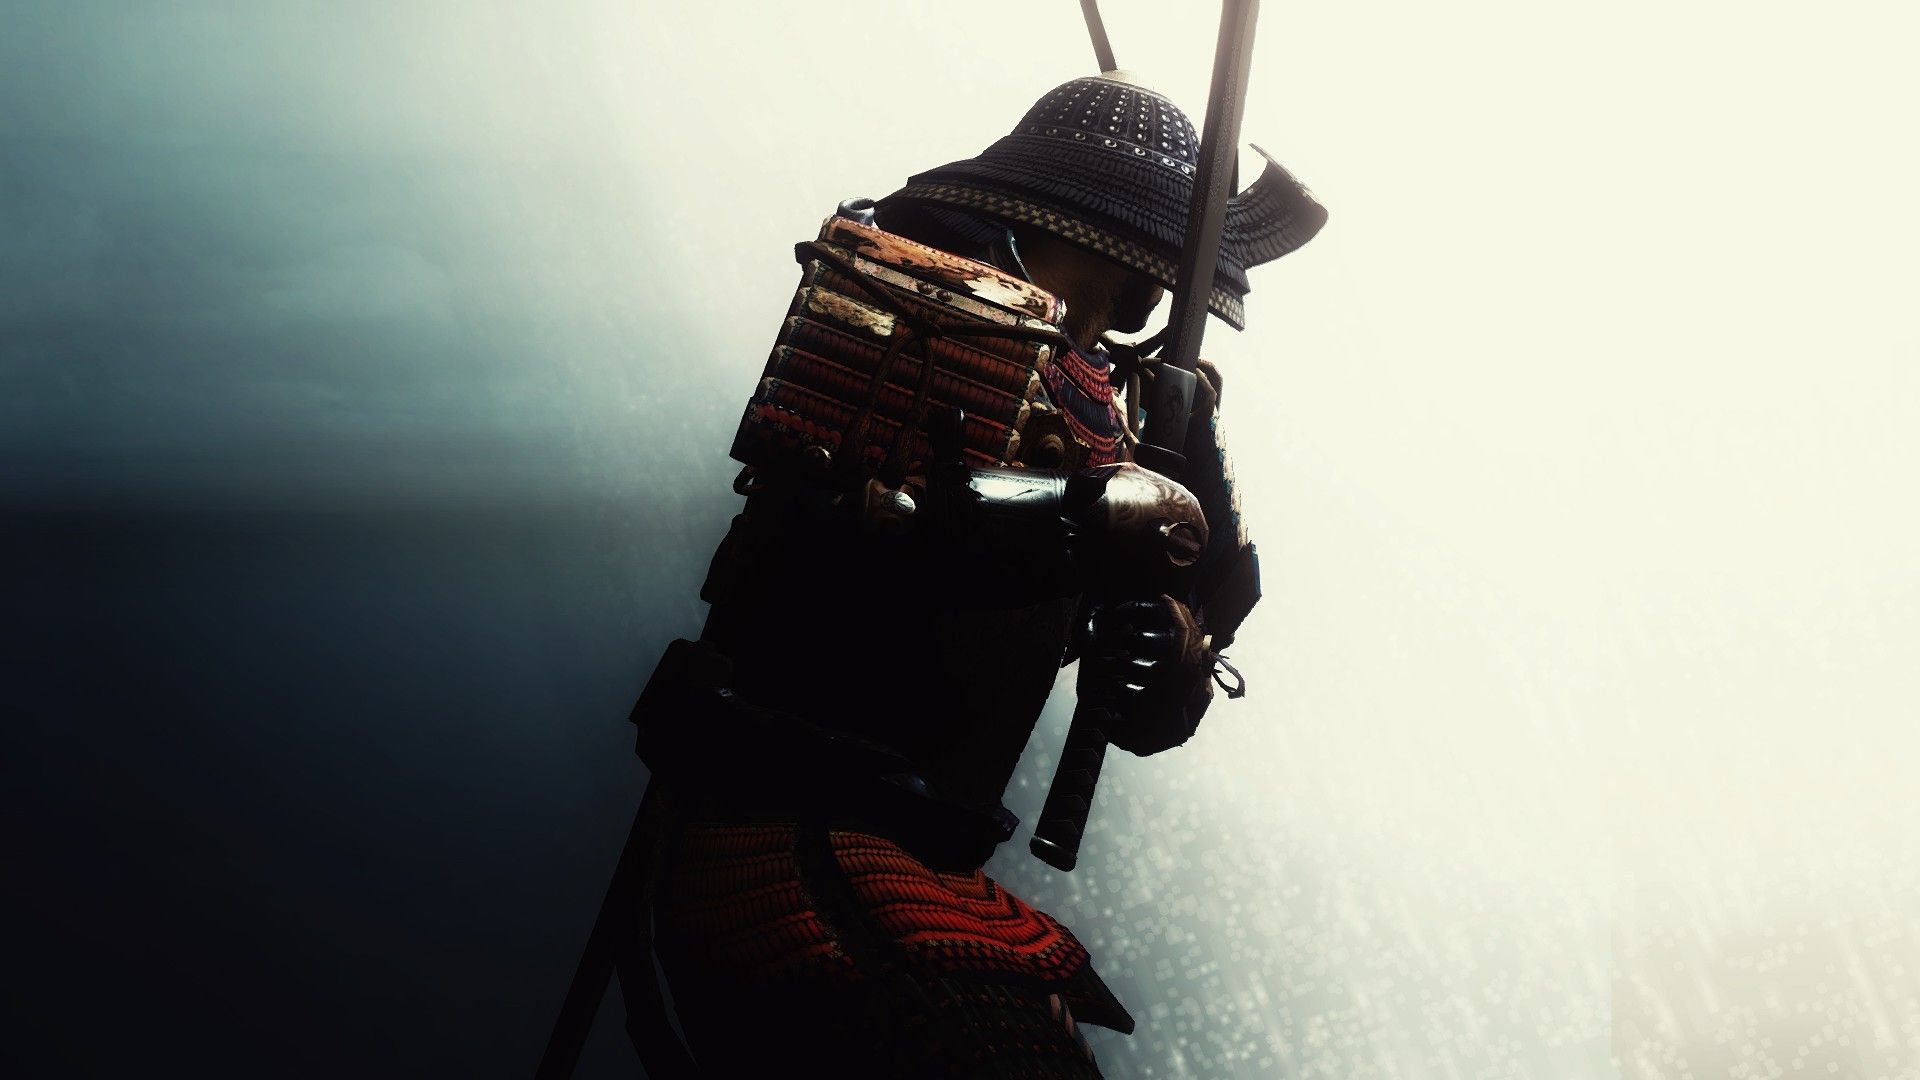 A man in armor holding two swords - Samurai